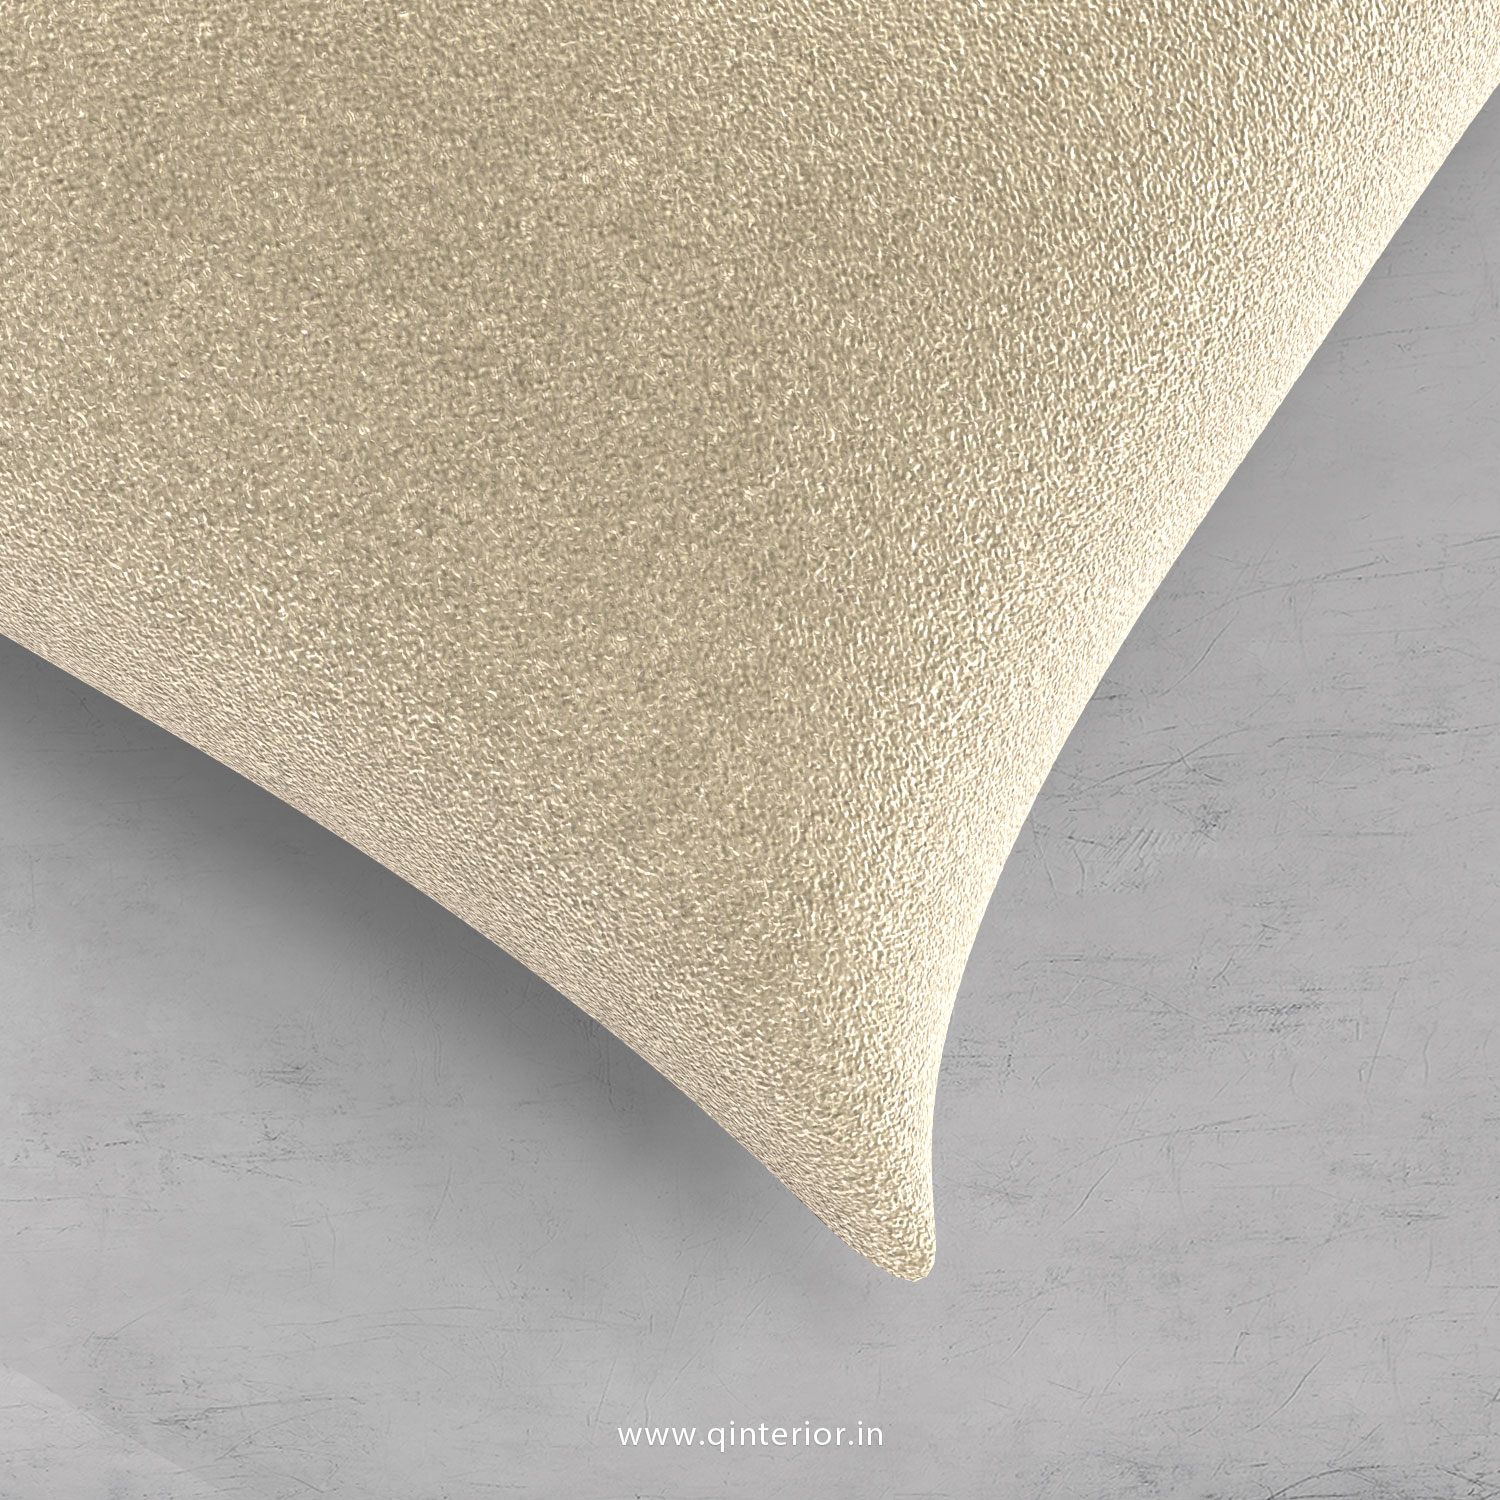 Cushion With Cushion Cover in Velvet Fabric - CUS001 VL01